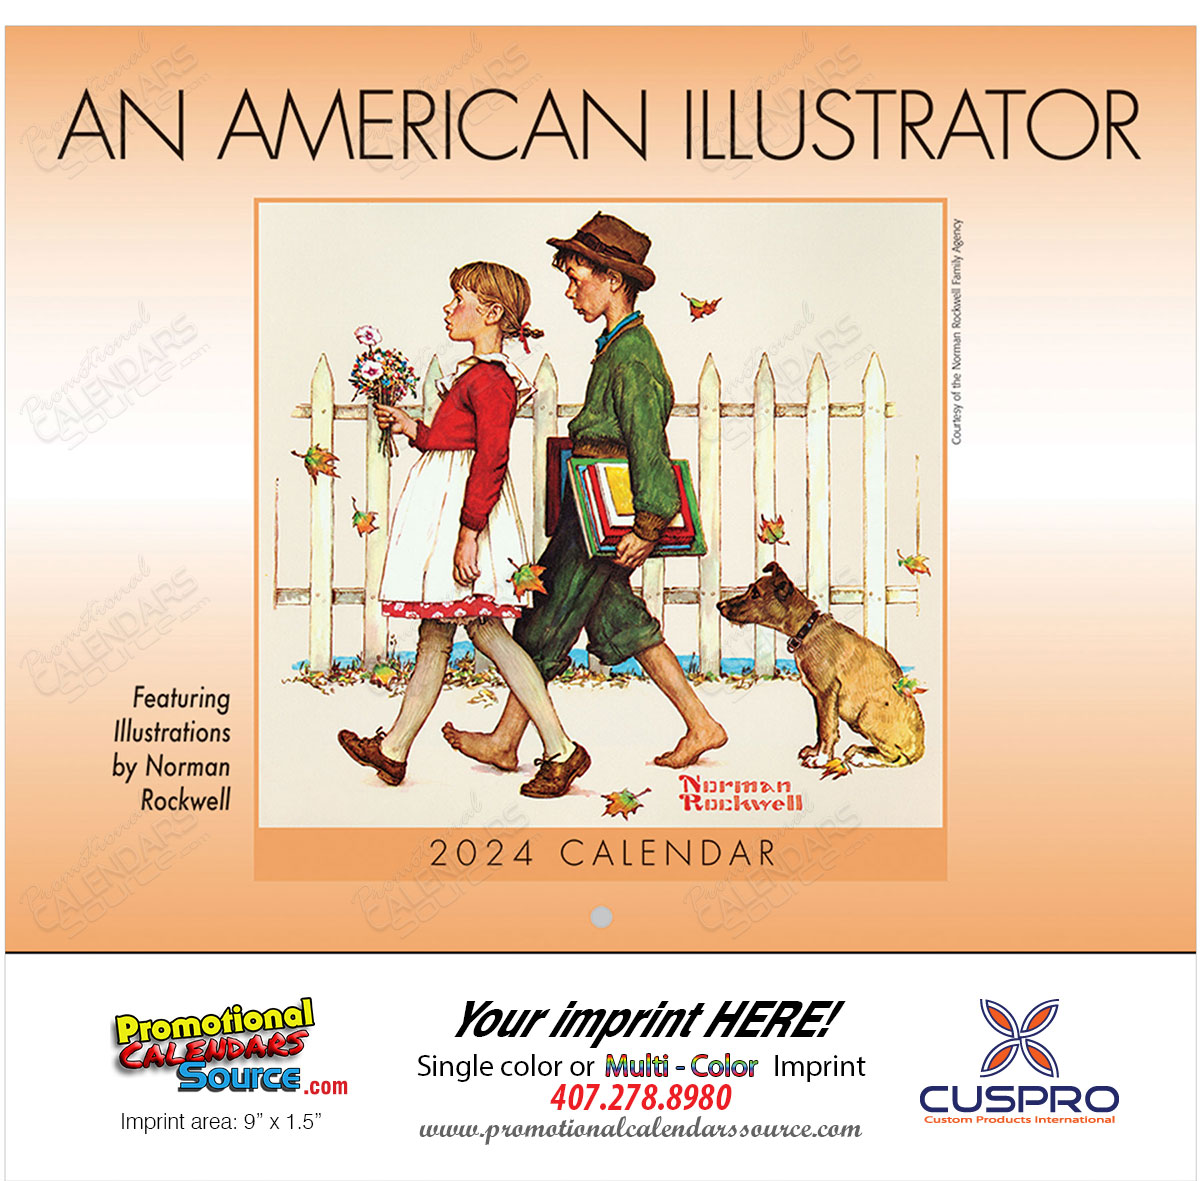 An American Illustrator Promotional Calendar 